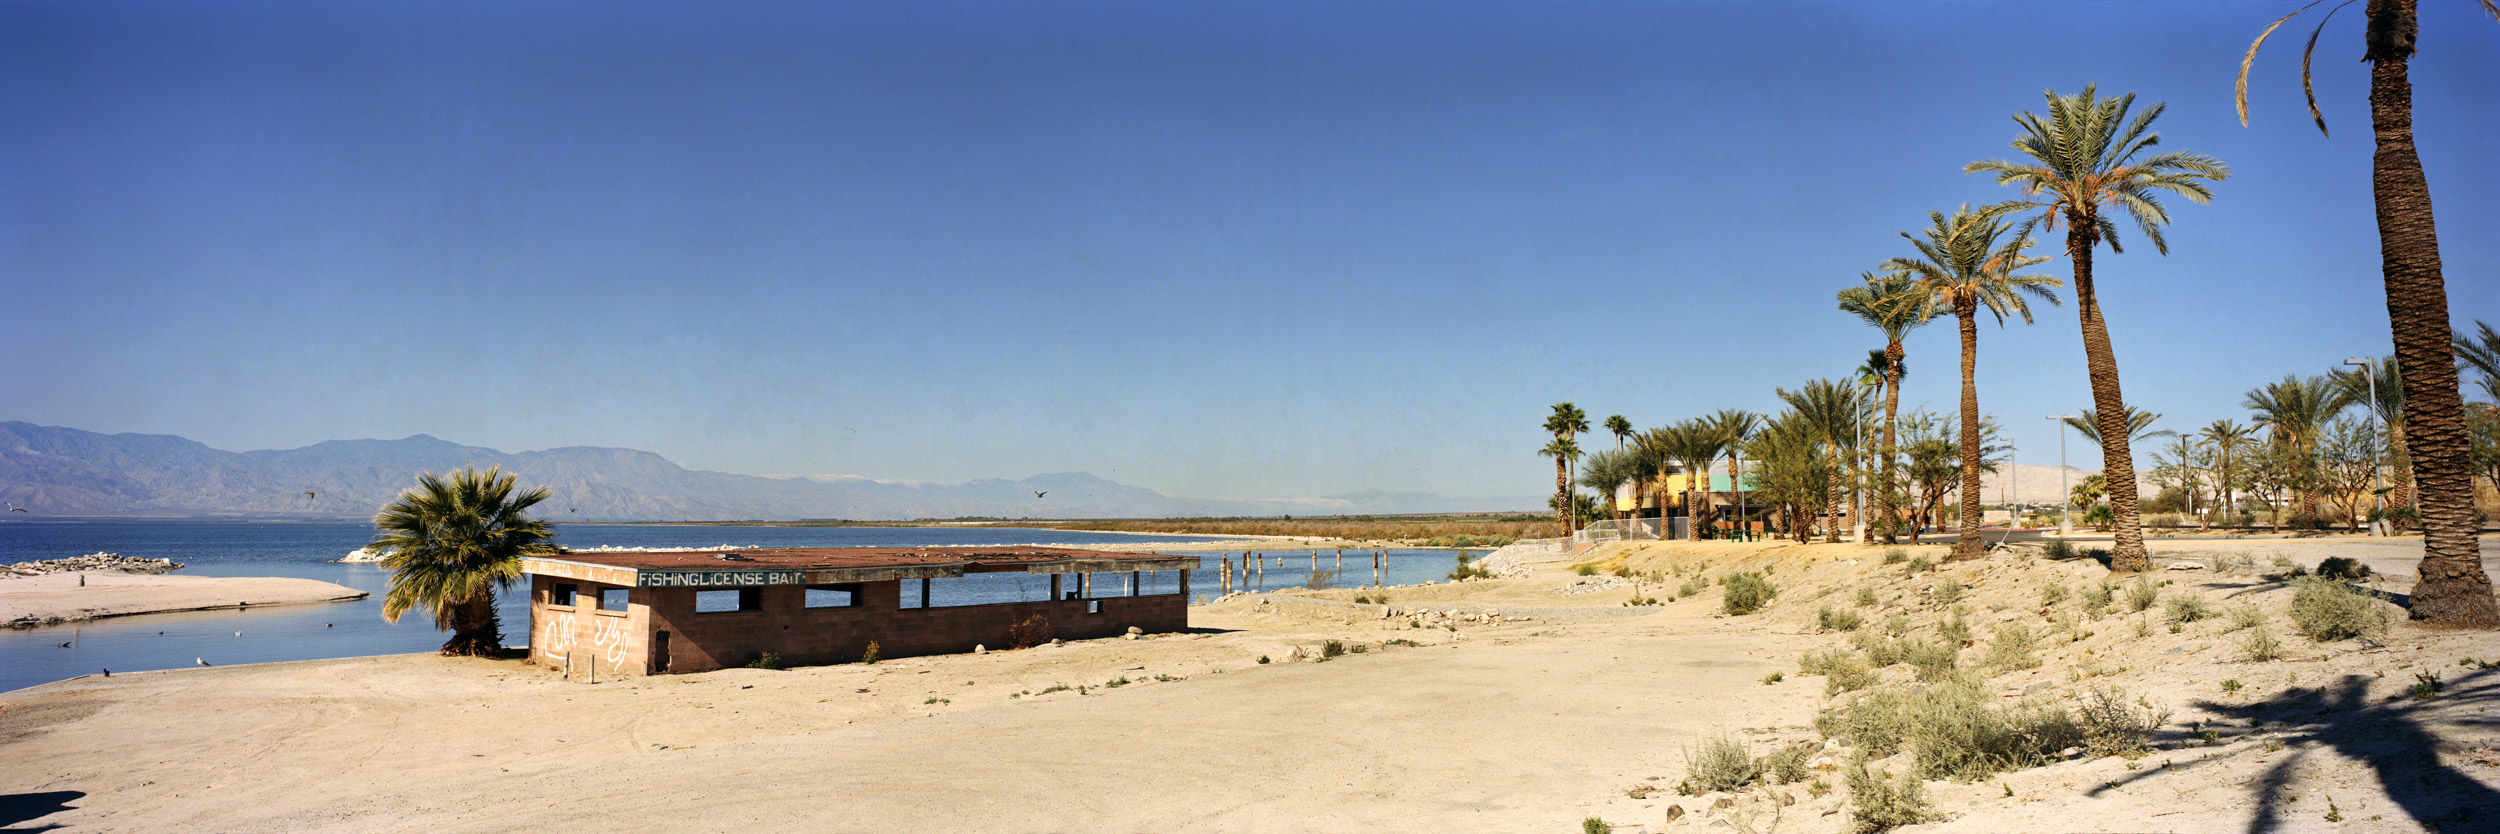 Salton Sea Beach, California